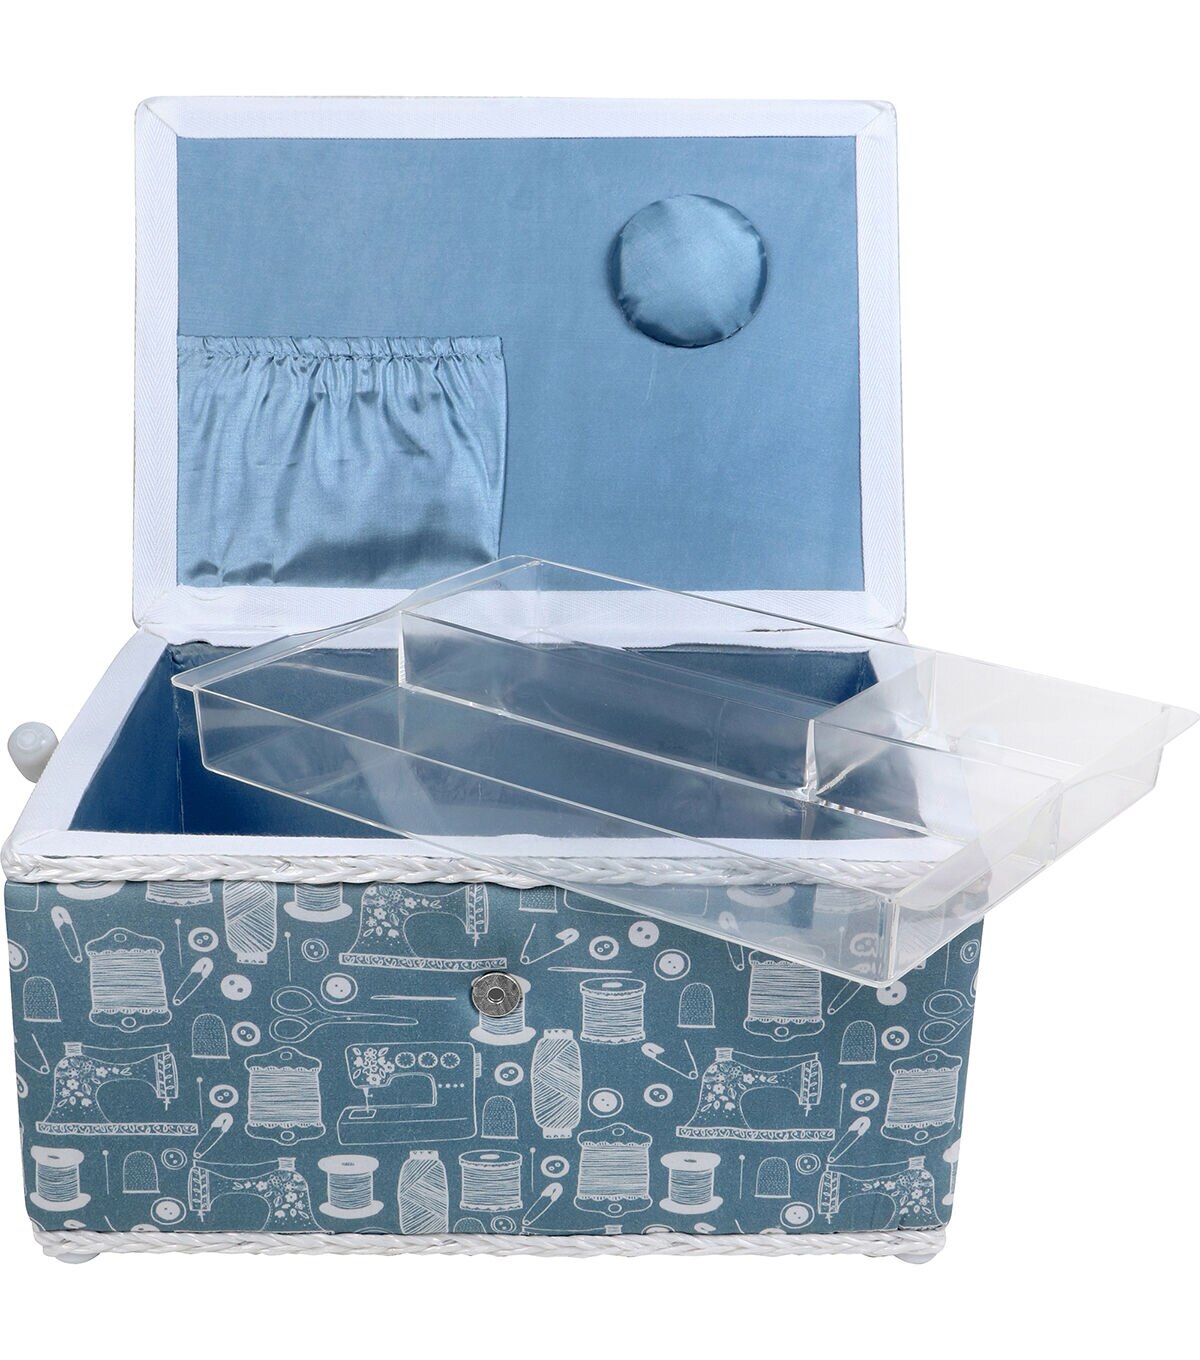 Printed Sewing Storage Basket Box Gift Set Sewing Tool Kit Accessories Case 